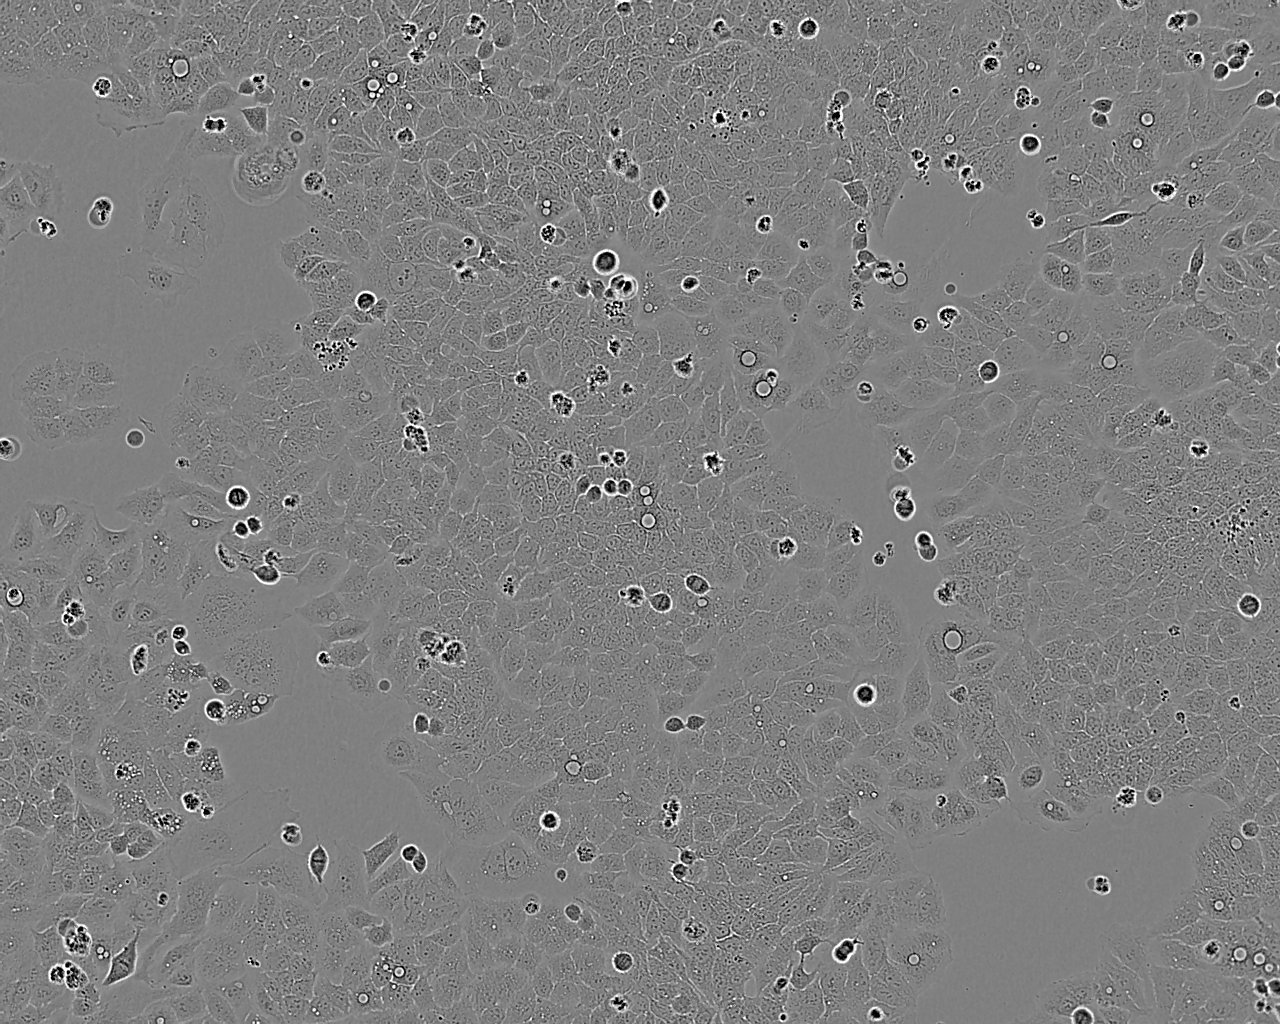 HSC-1 epithelioid cells人皮肤鳞癌细胞系,HSC-1 epithelioid cells